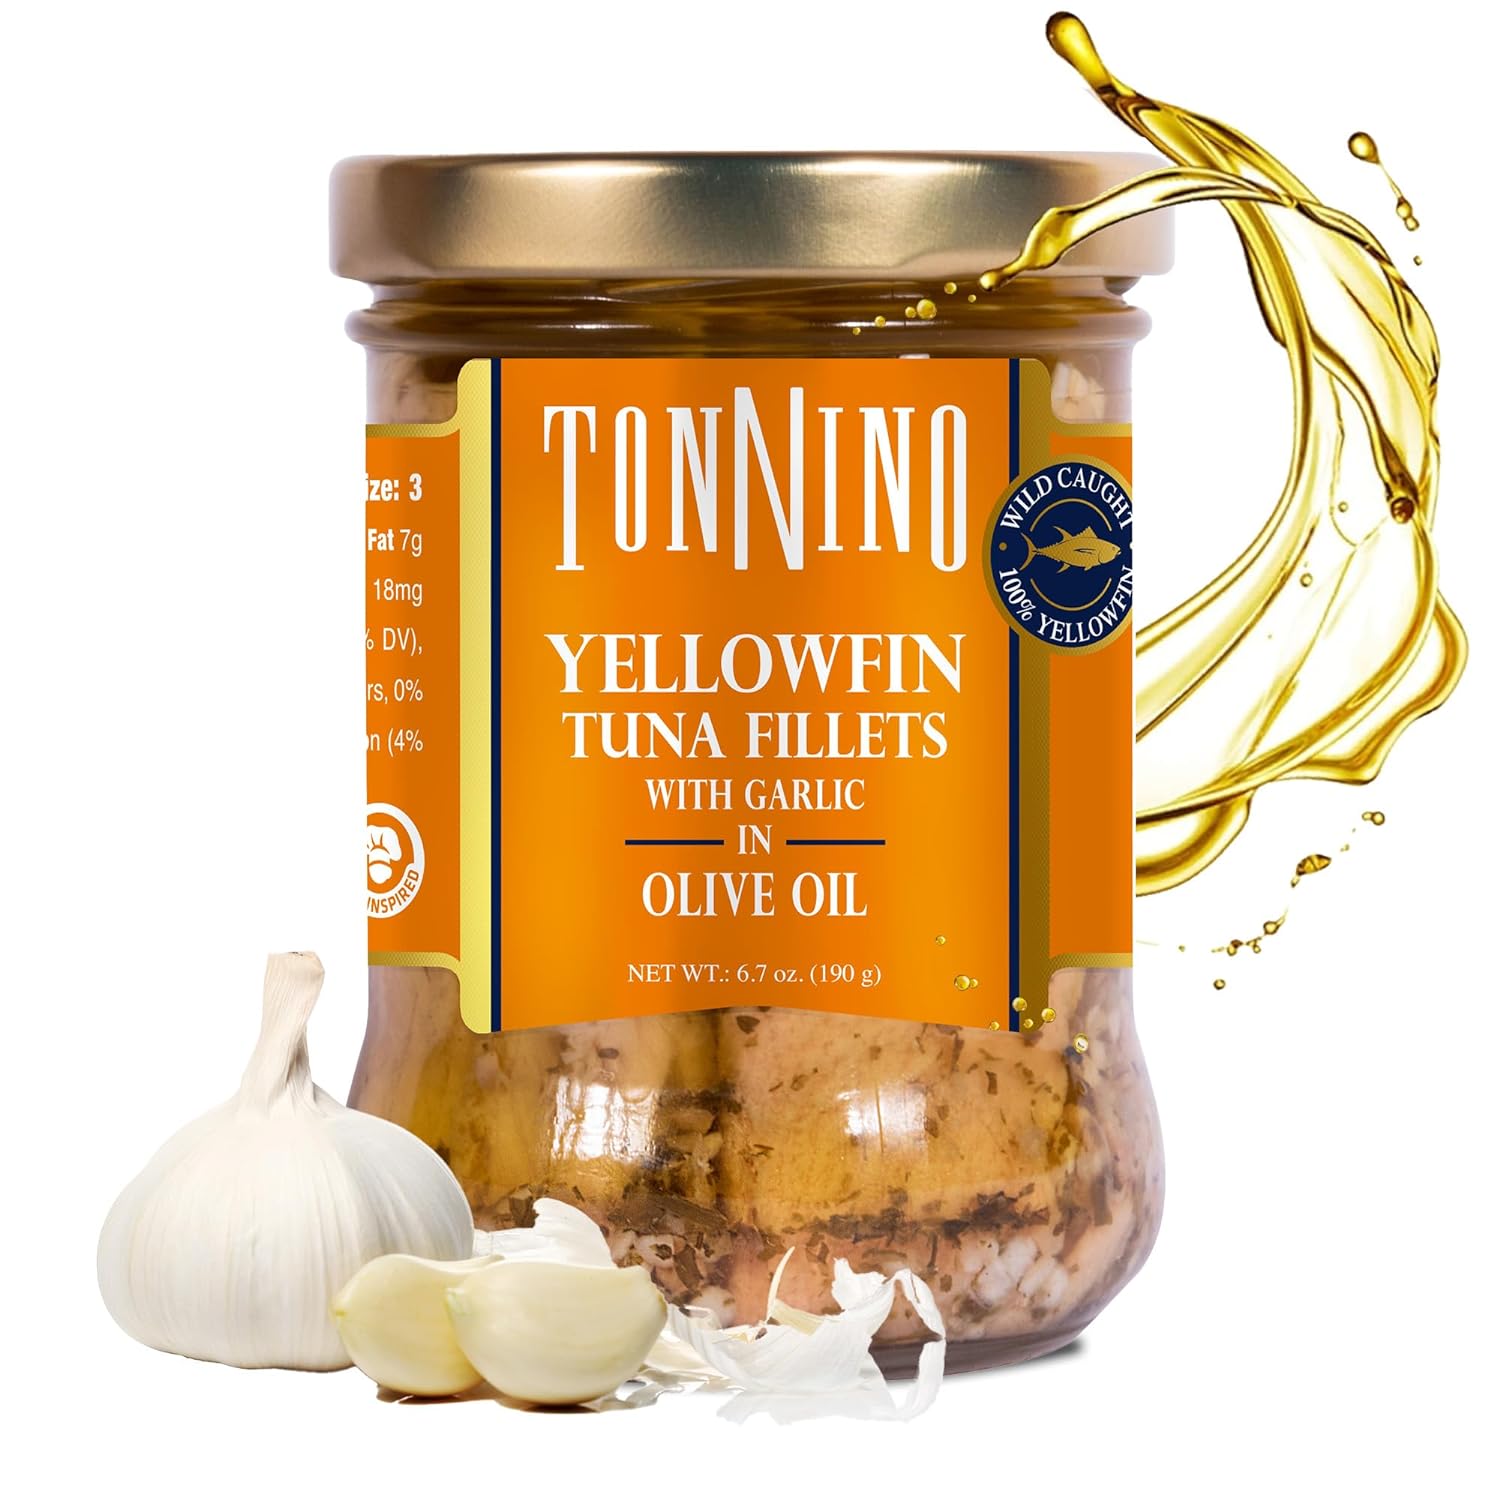 Tonnino Yellowfin Tuna in Olive Oil with Garlic 6.7 oz - 6-Pack: Omega-3, High Protein, Gluten-Free, Ready-to-Eat Tuna Packets for Tuna Salad, Tuna Fish Alternative to Salmon, Rich Flavor Tuna fish